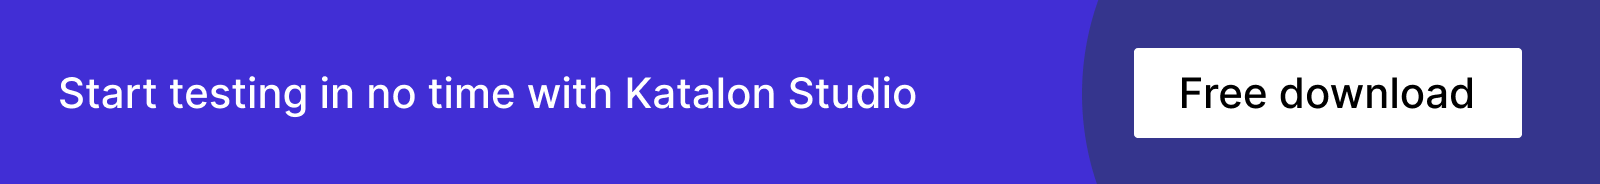 start testing with Katalon Studio